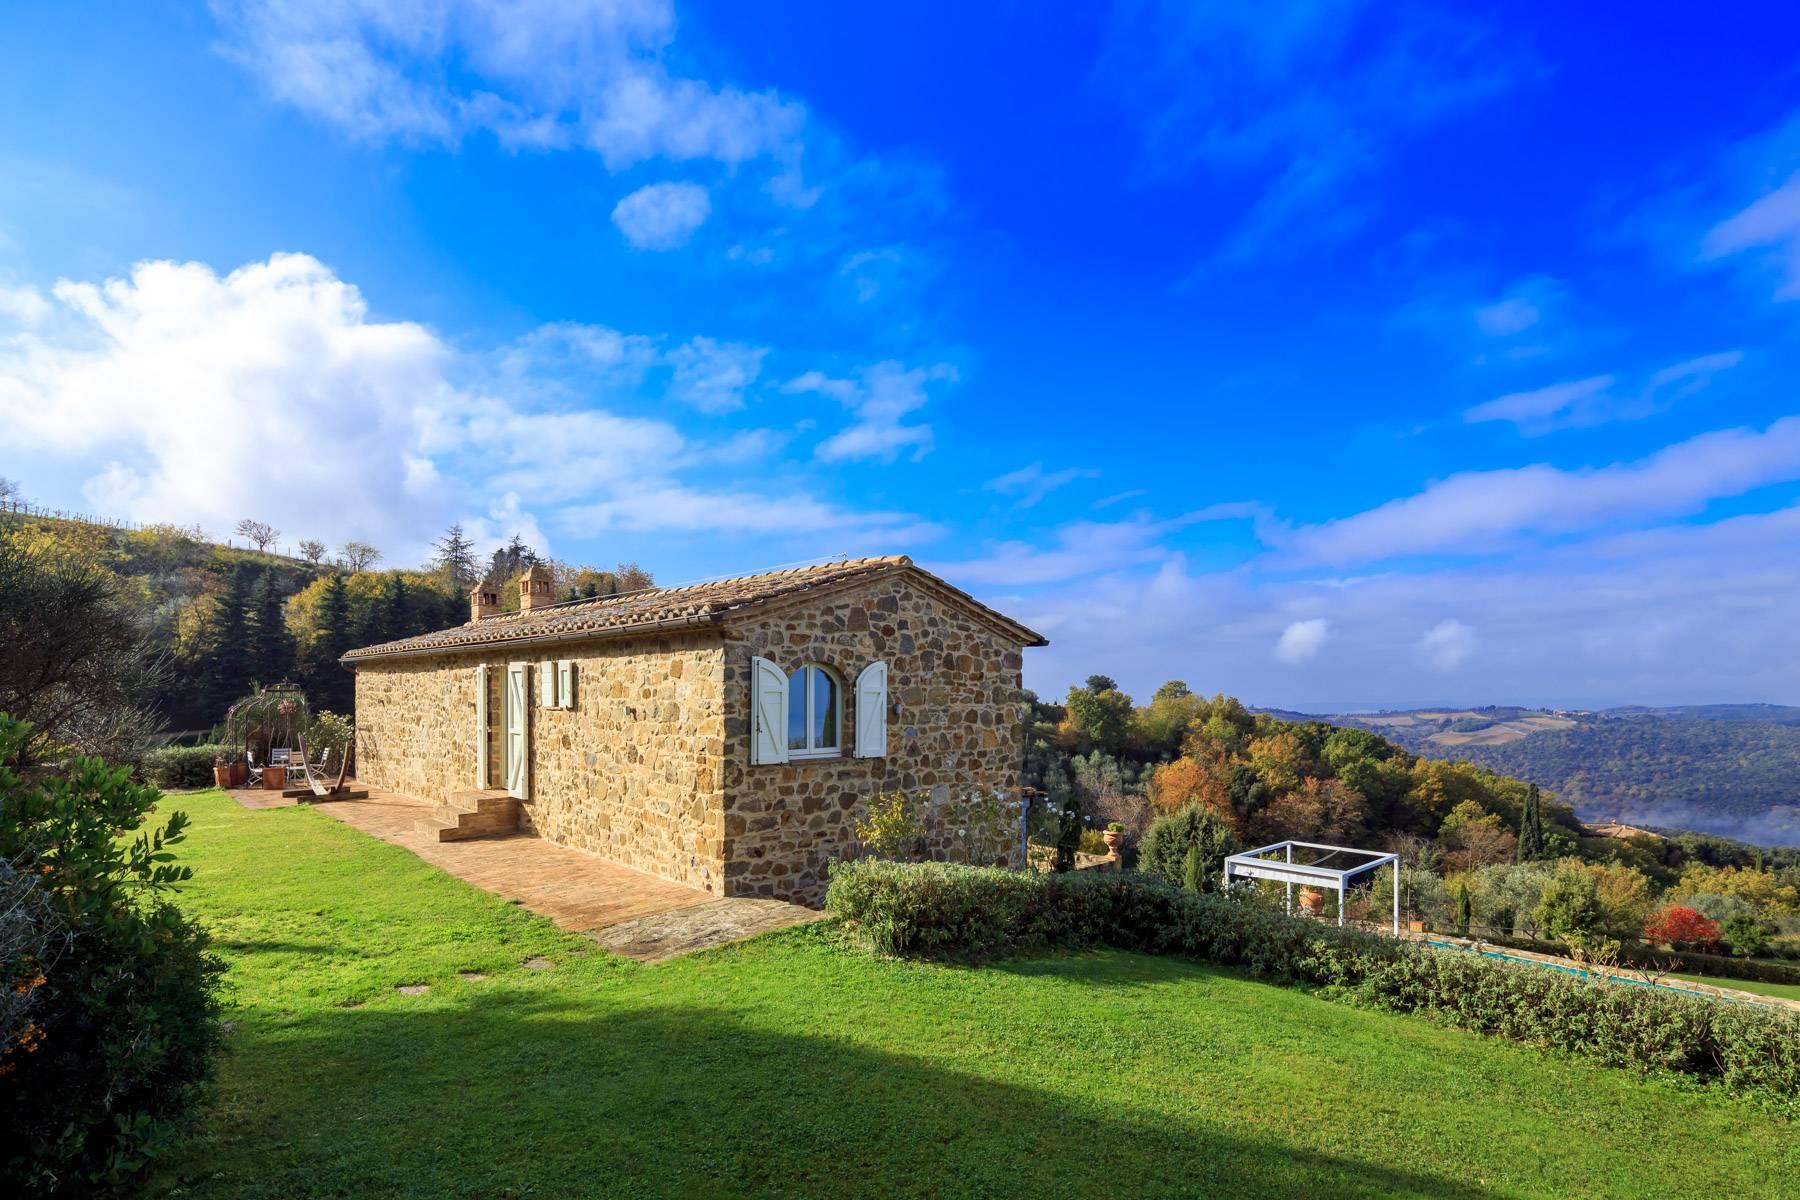 Marvelous newly restored farmhouse close to Montalcino - 30